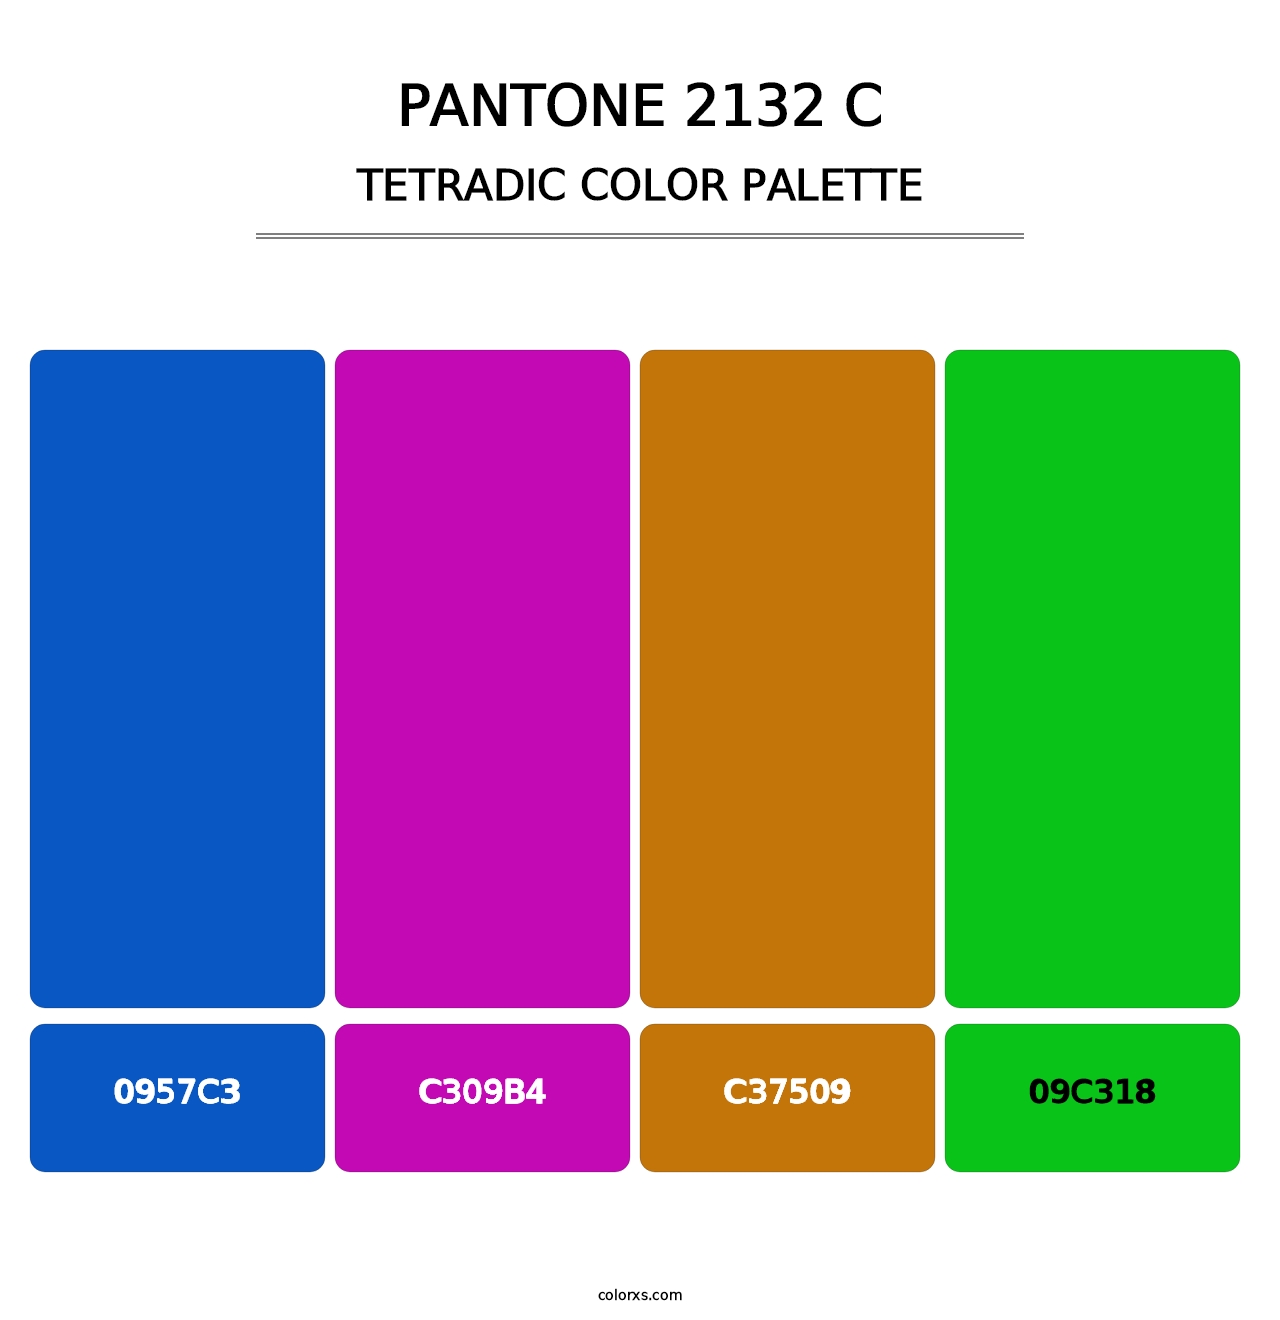 PANTONE 2132 C - Tetradic Color Palette